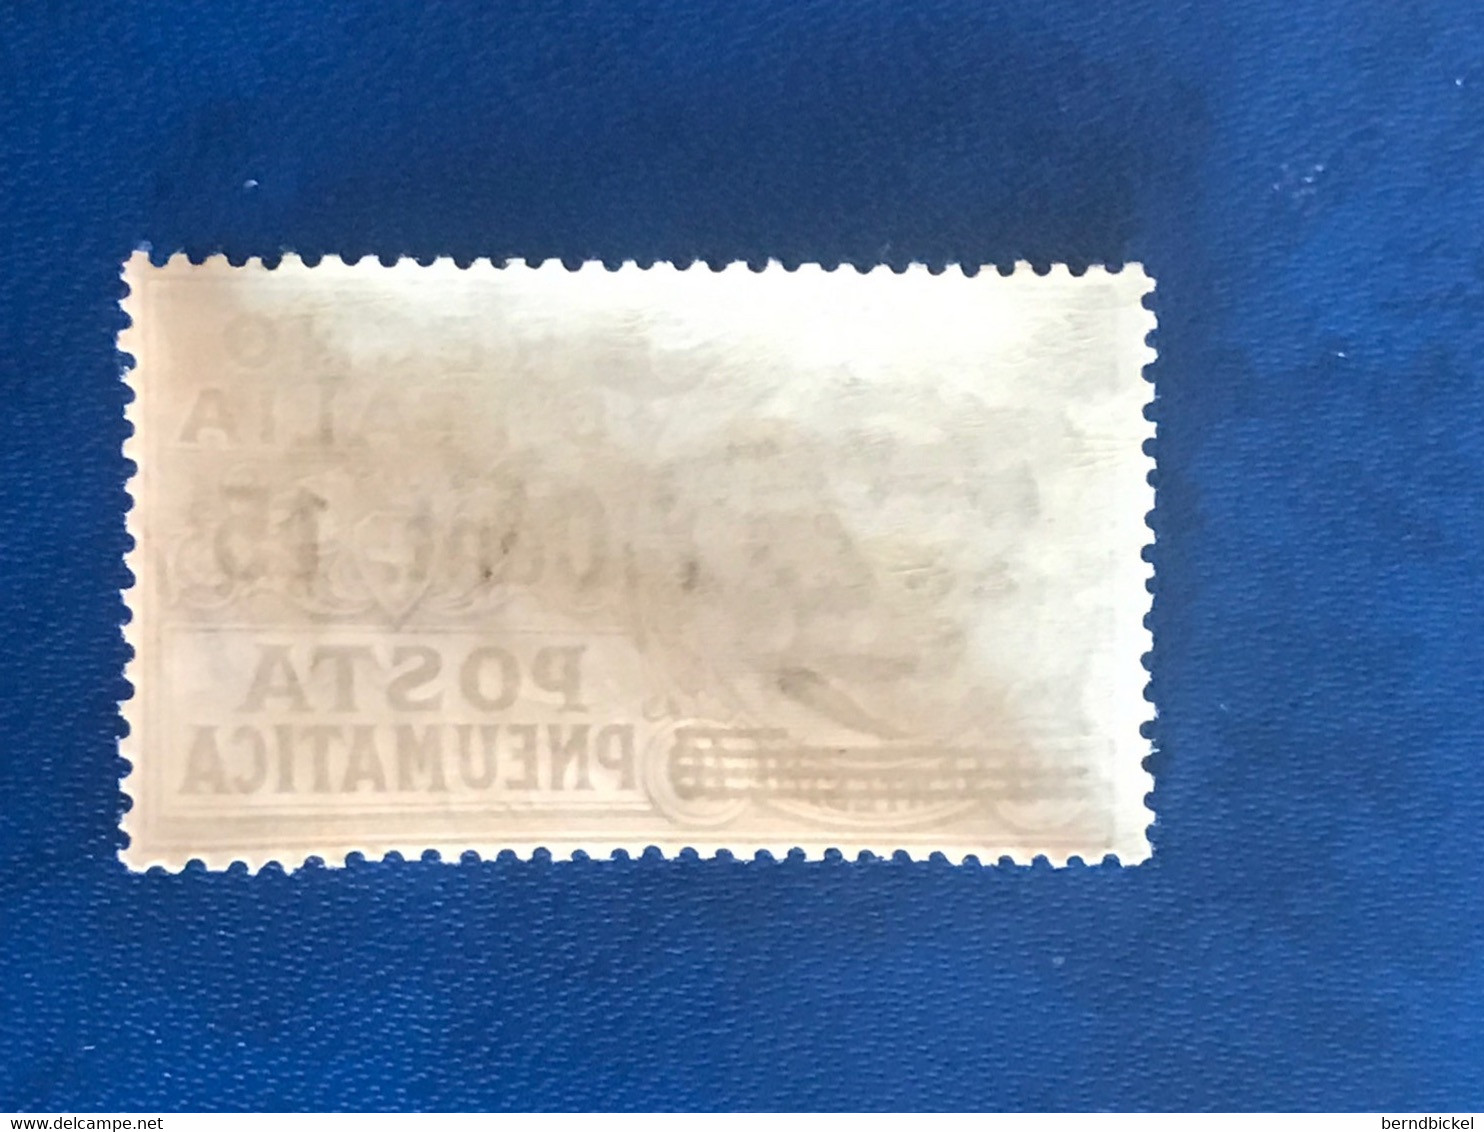 Italien 15 Centesimi Überdruck 10 Centesimi 1924 Postfrisch Posta Pneumatica Michel 173 - Pneumatic Mail